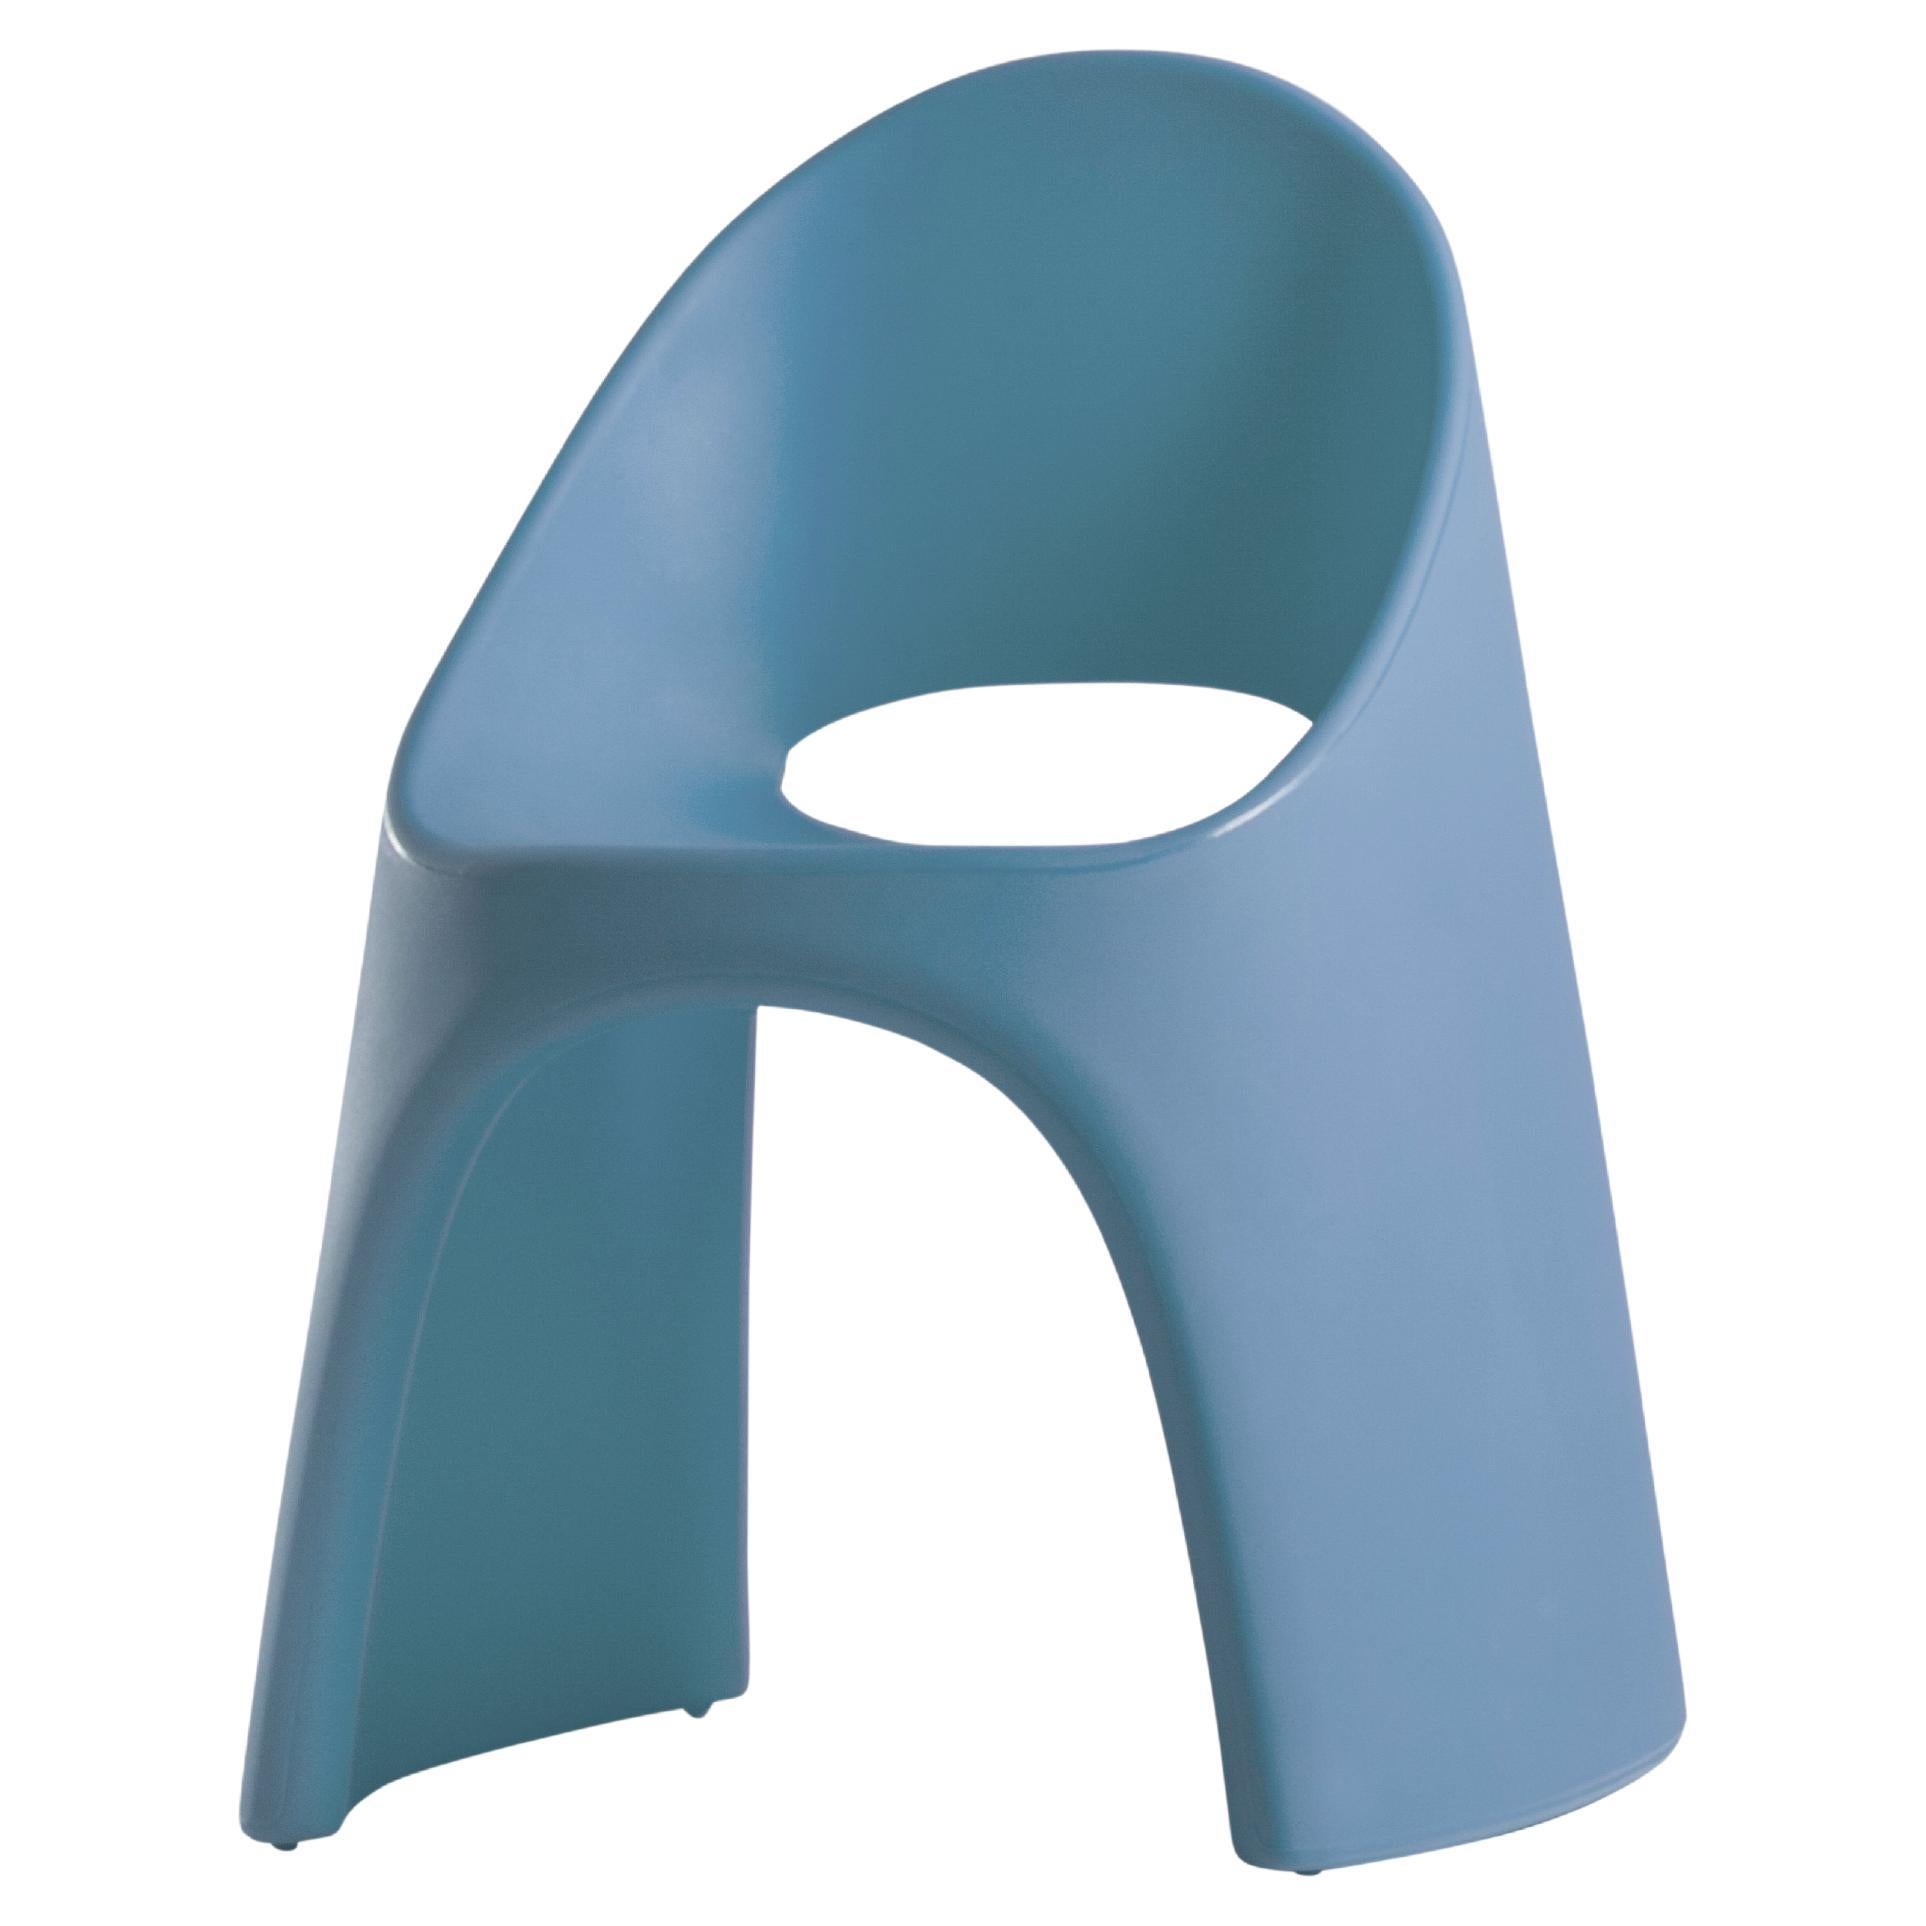 Slide Design Amélie Chair in Powder Blue by Italo Pertichini